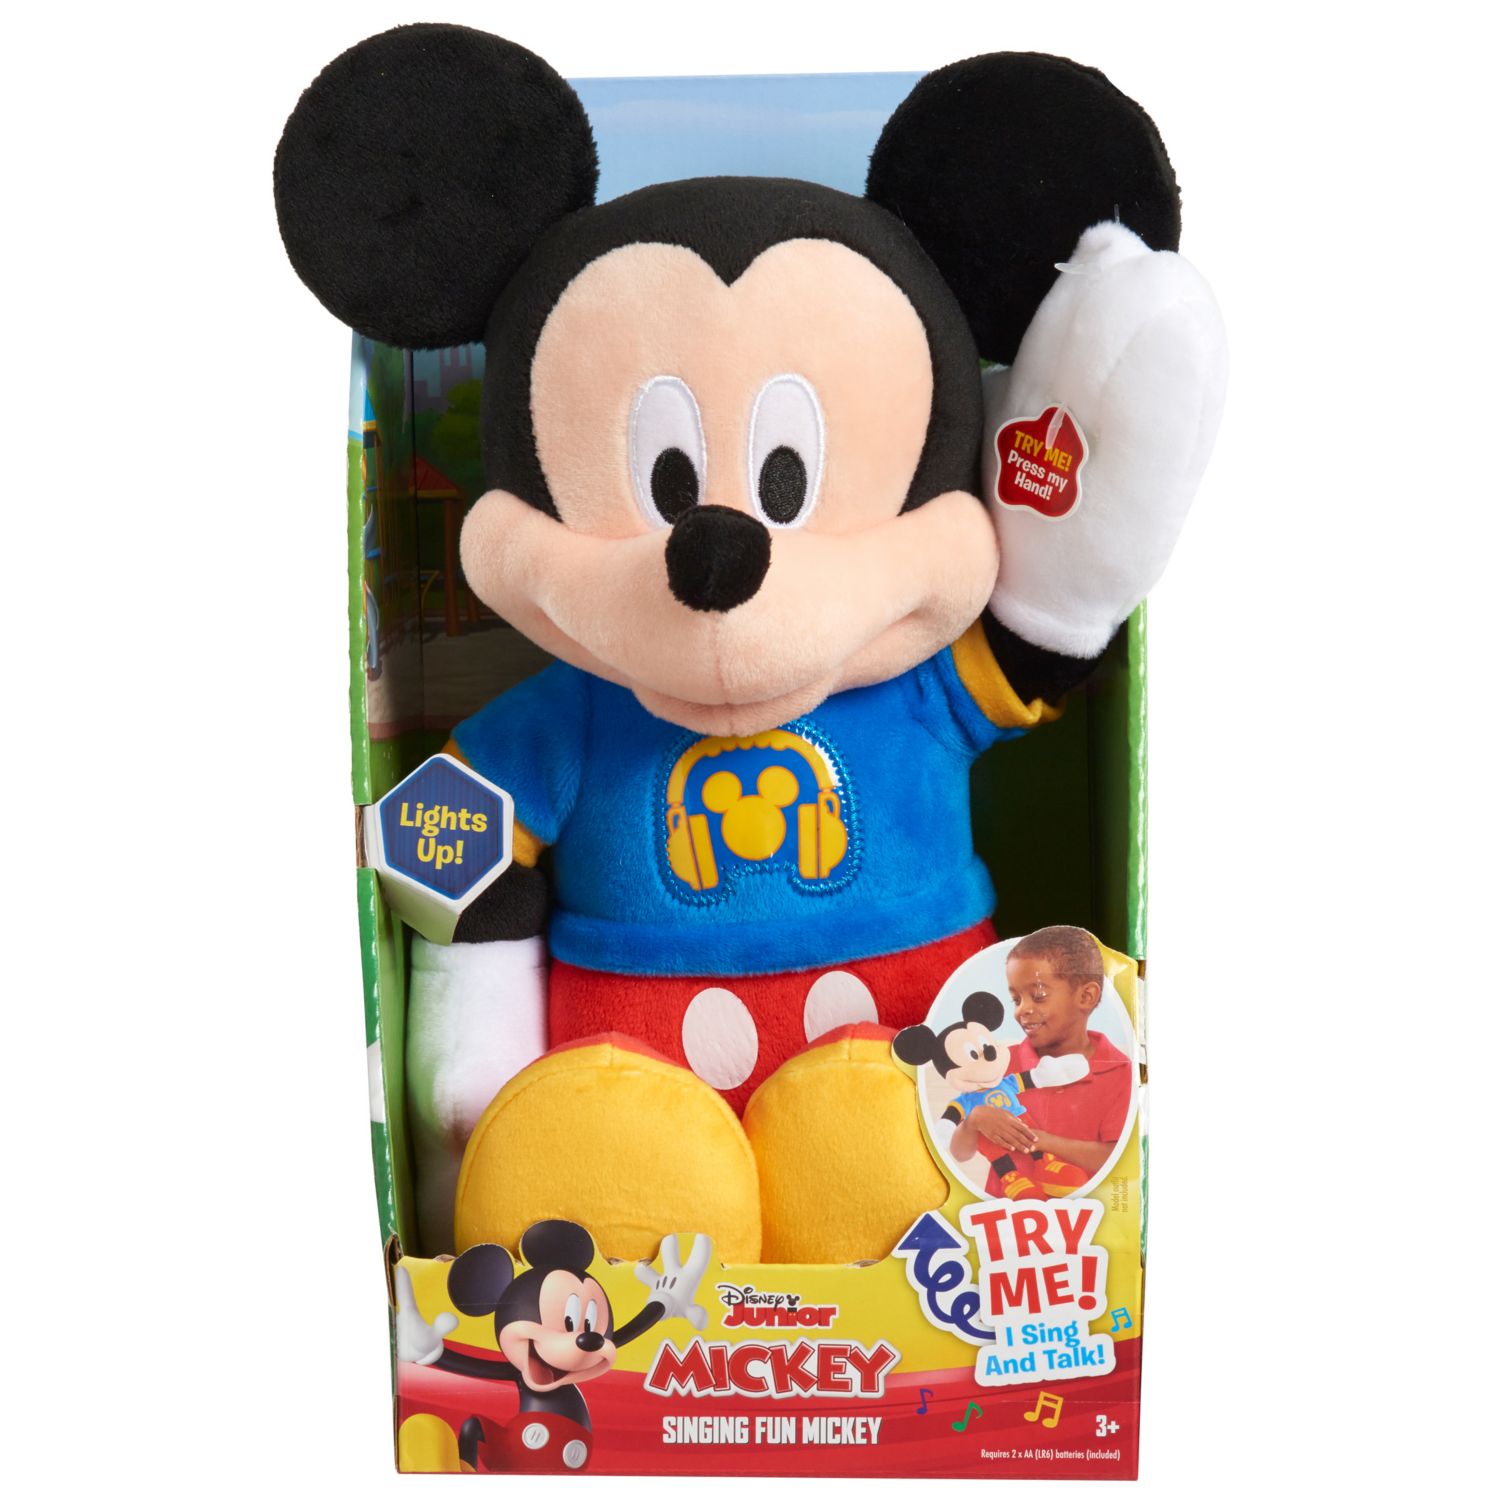 stuffed animal mickey mouse